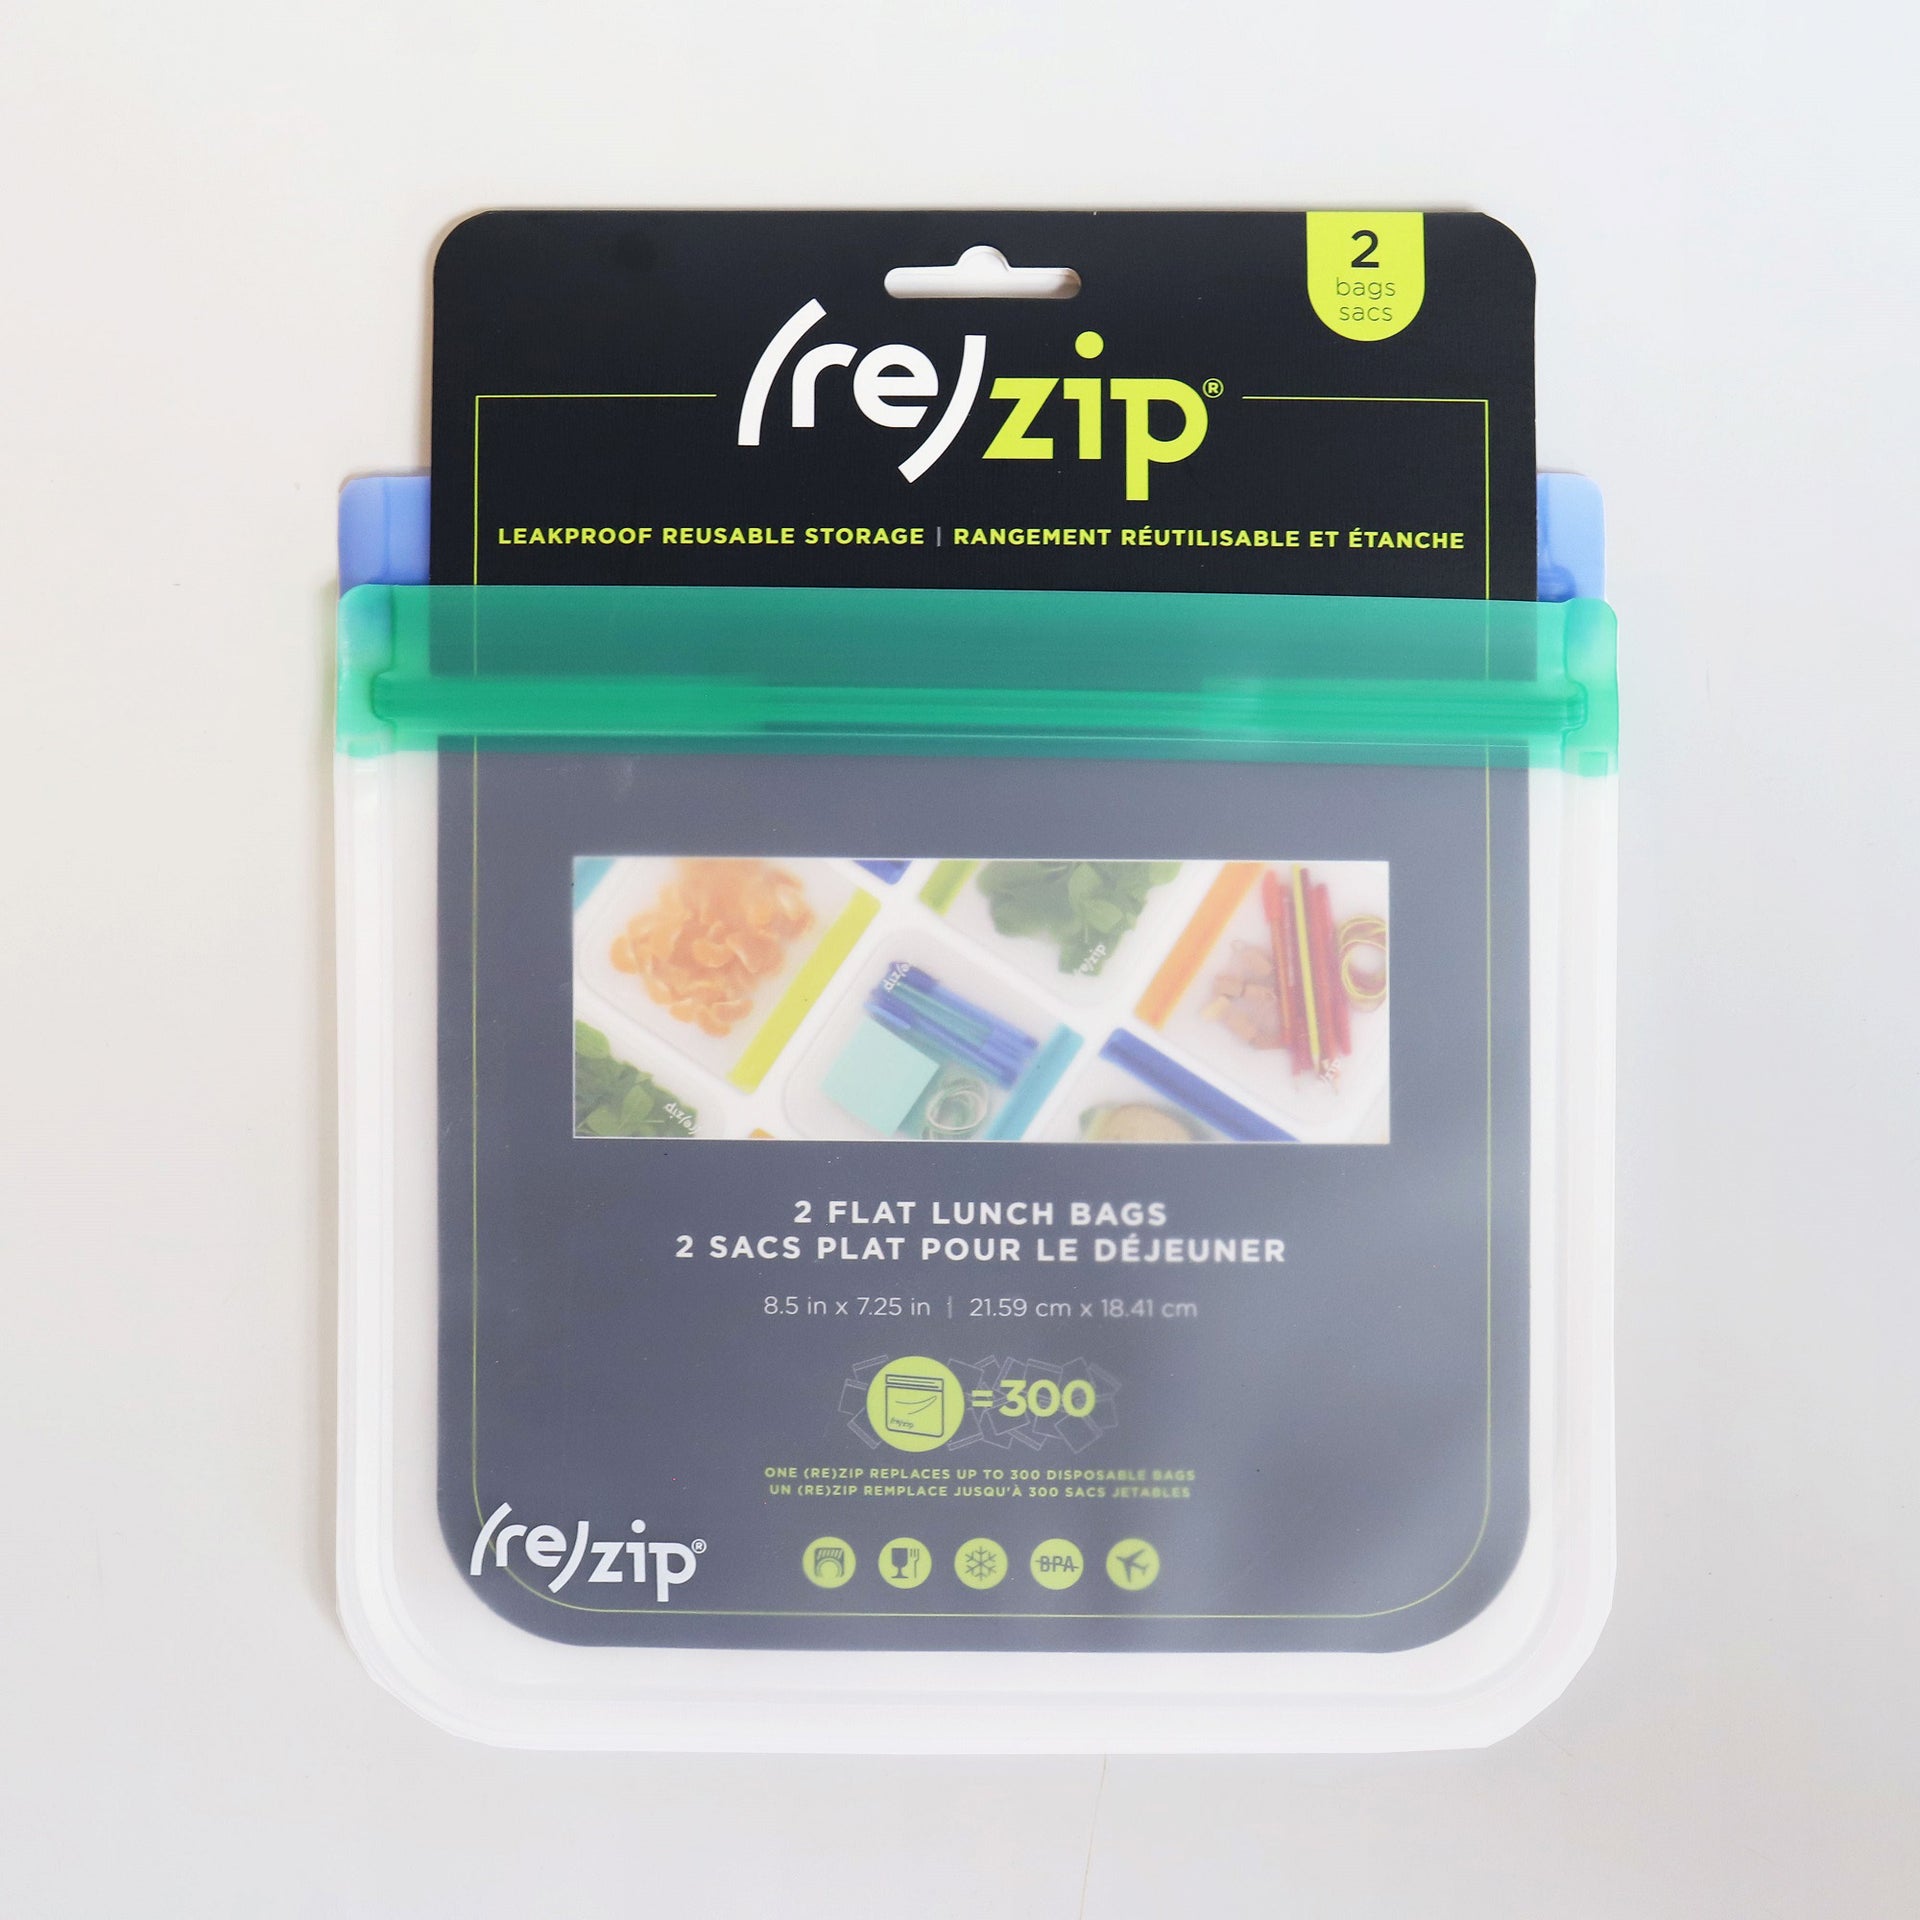 re)zip Reusable Leak-proof Food Storage Bag Kit - Snack & Lunch